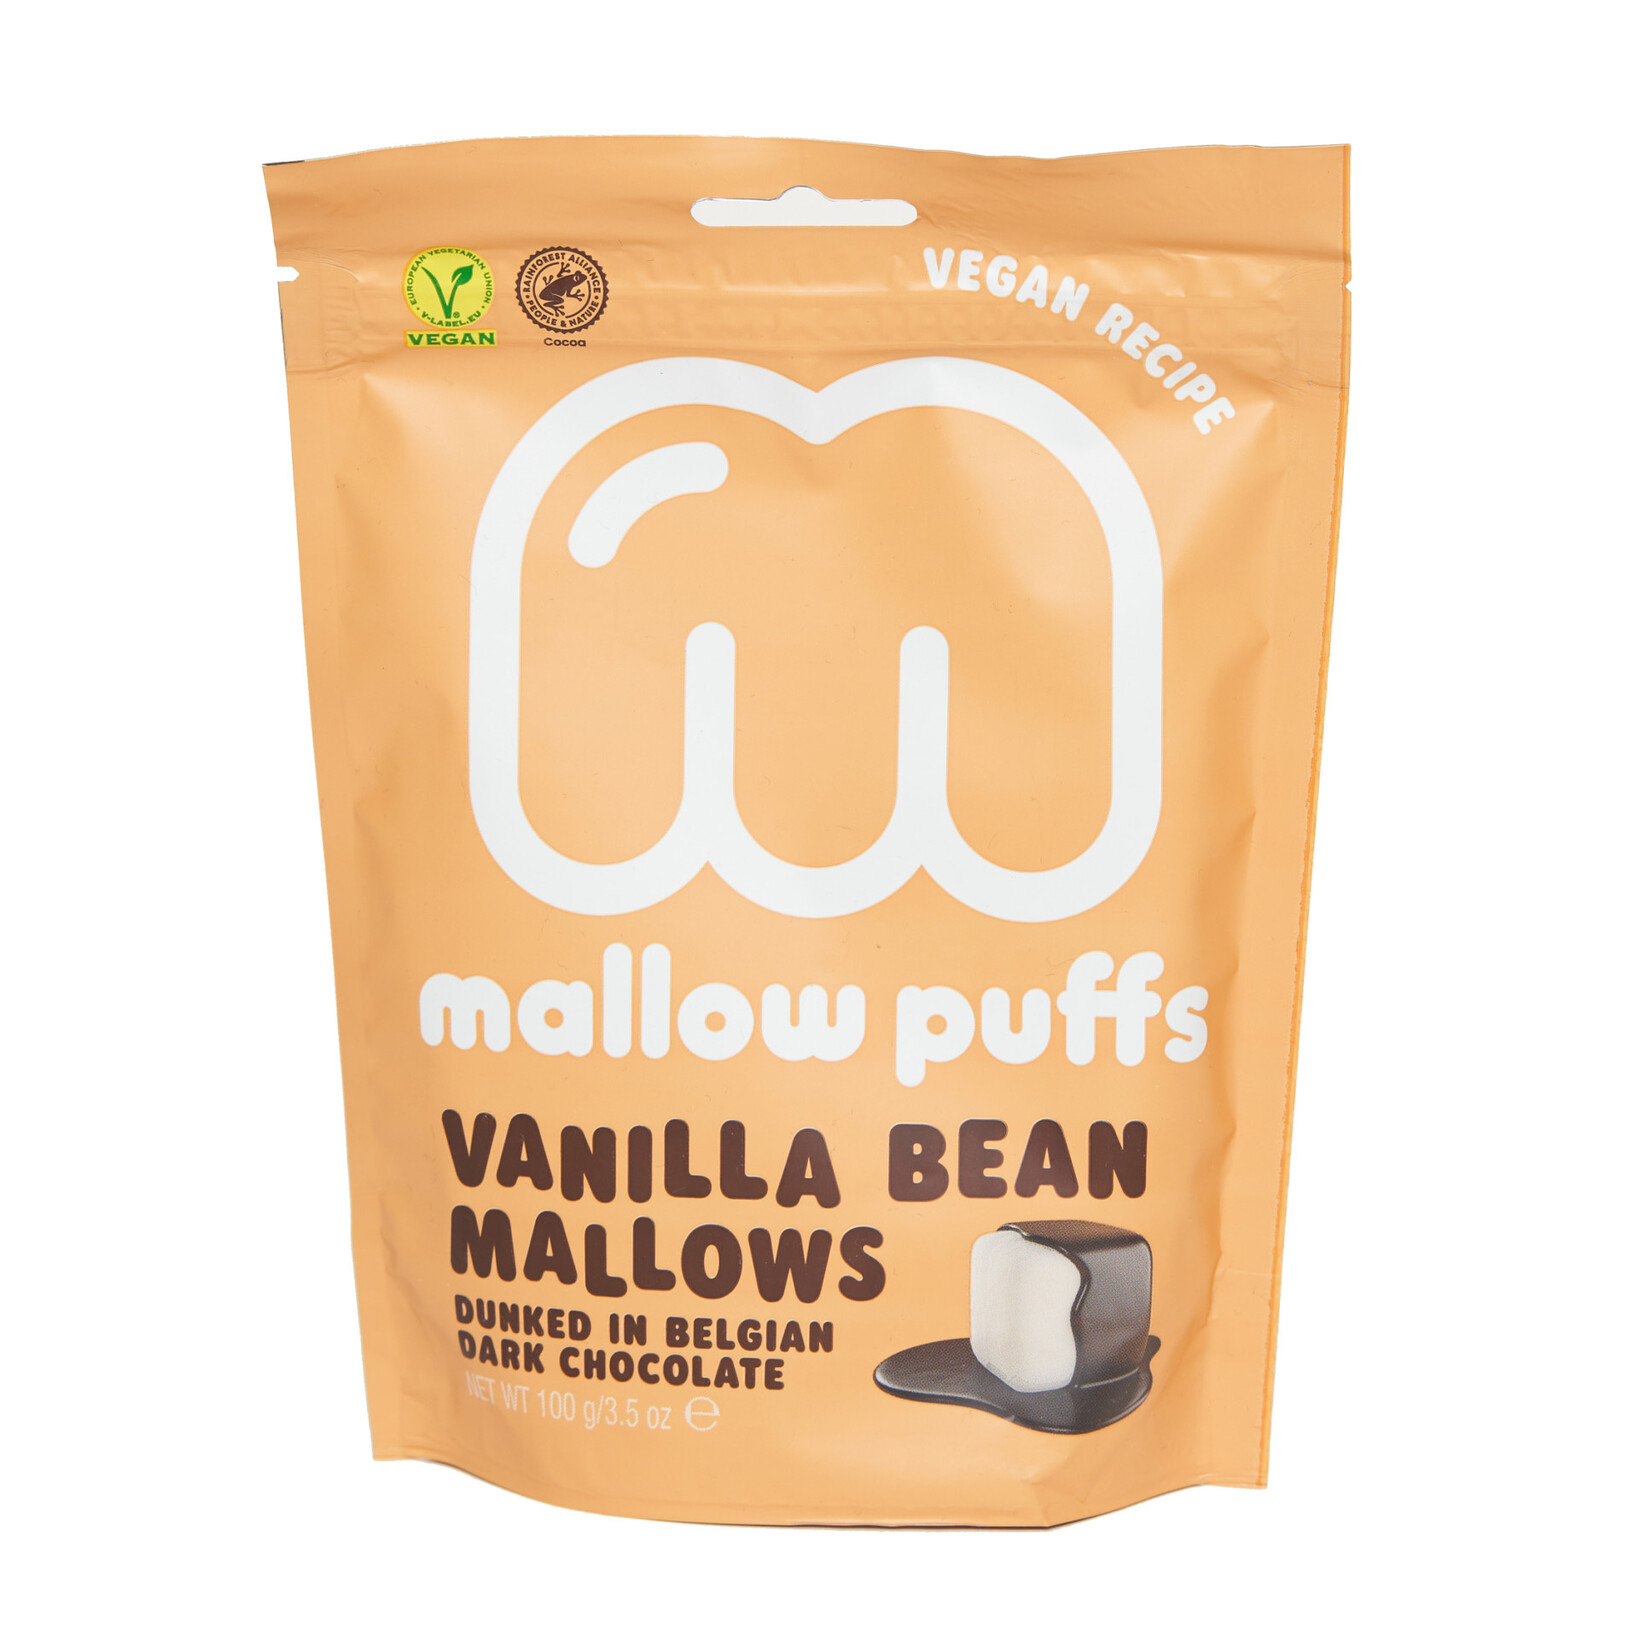 BARÚ Mallow Puffs - Vegan Vanilla Bean Mallows dunked in Belgian dark chocolate